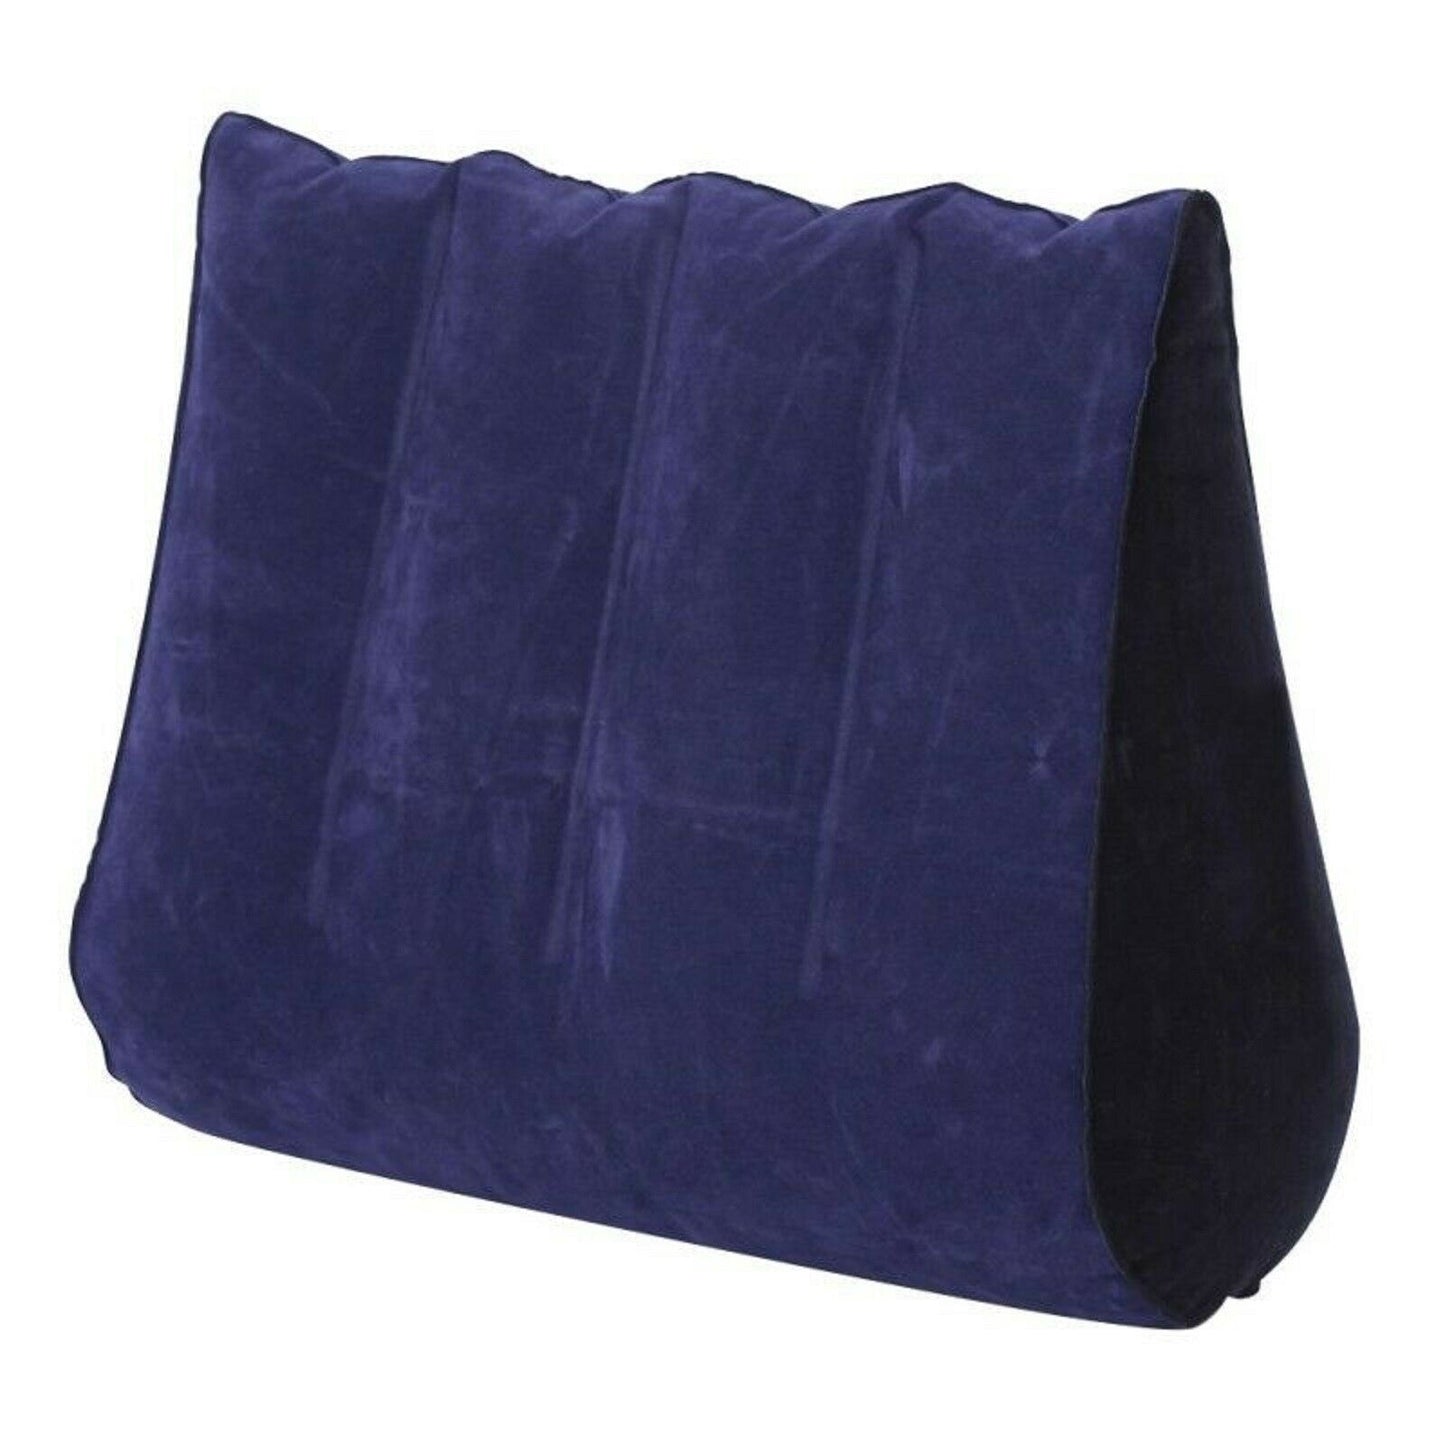 Sex Pillow Position Enhancer Wedge Bondage Furniture Cushion Couples Sex Toy NEW